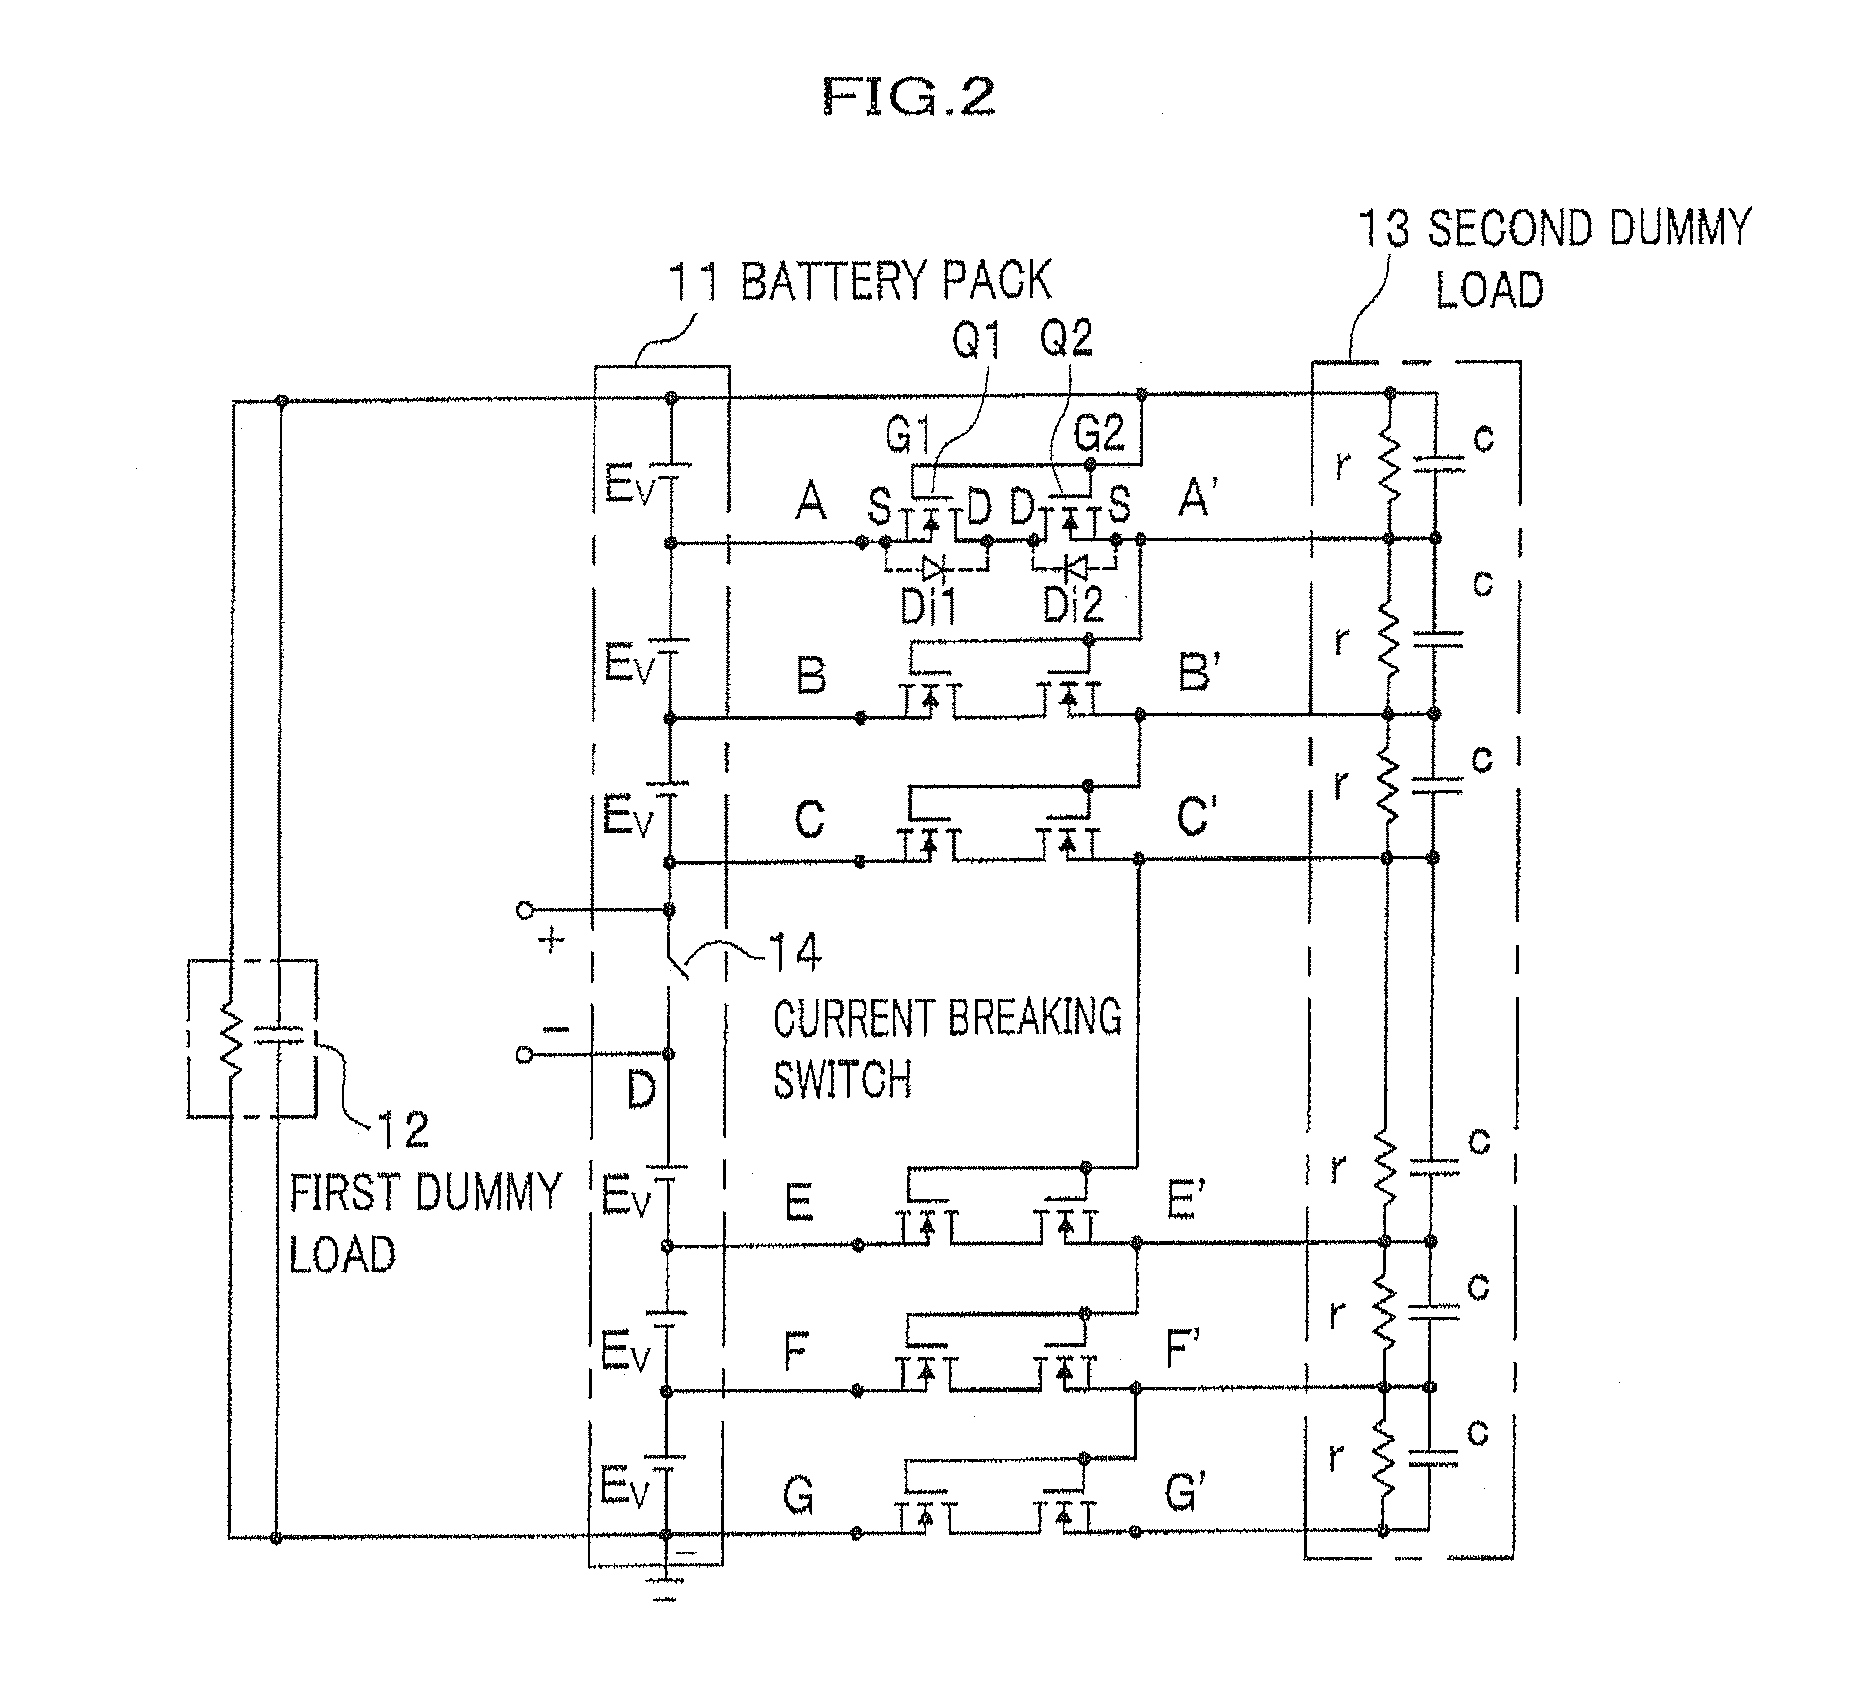 Voltage monitor circuit